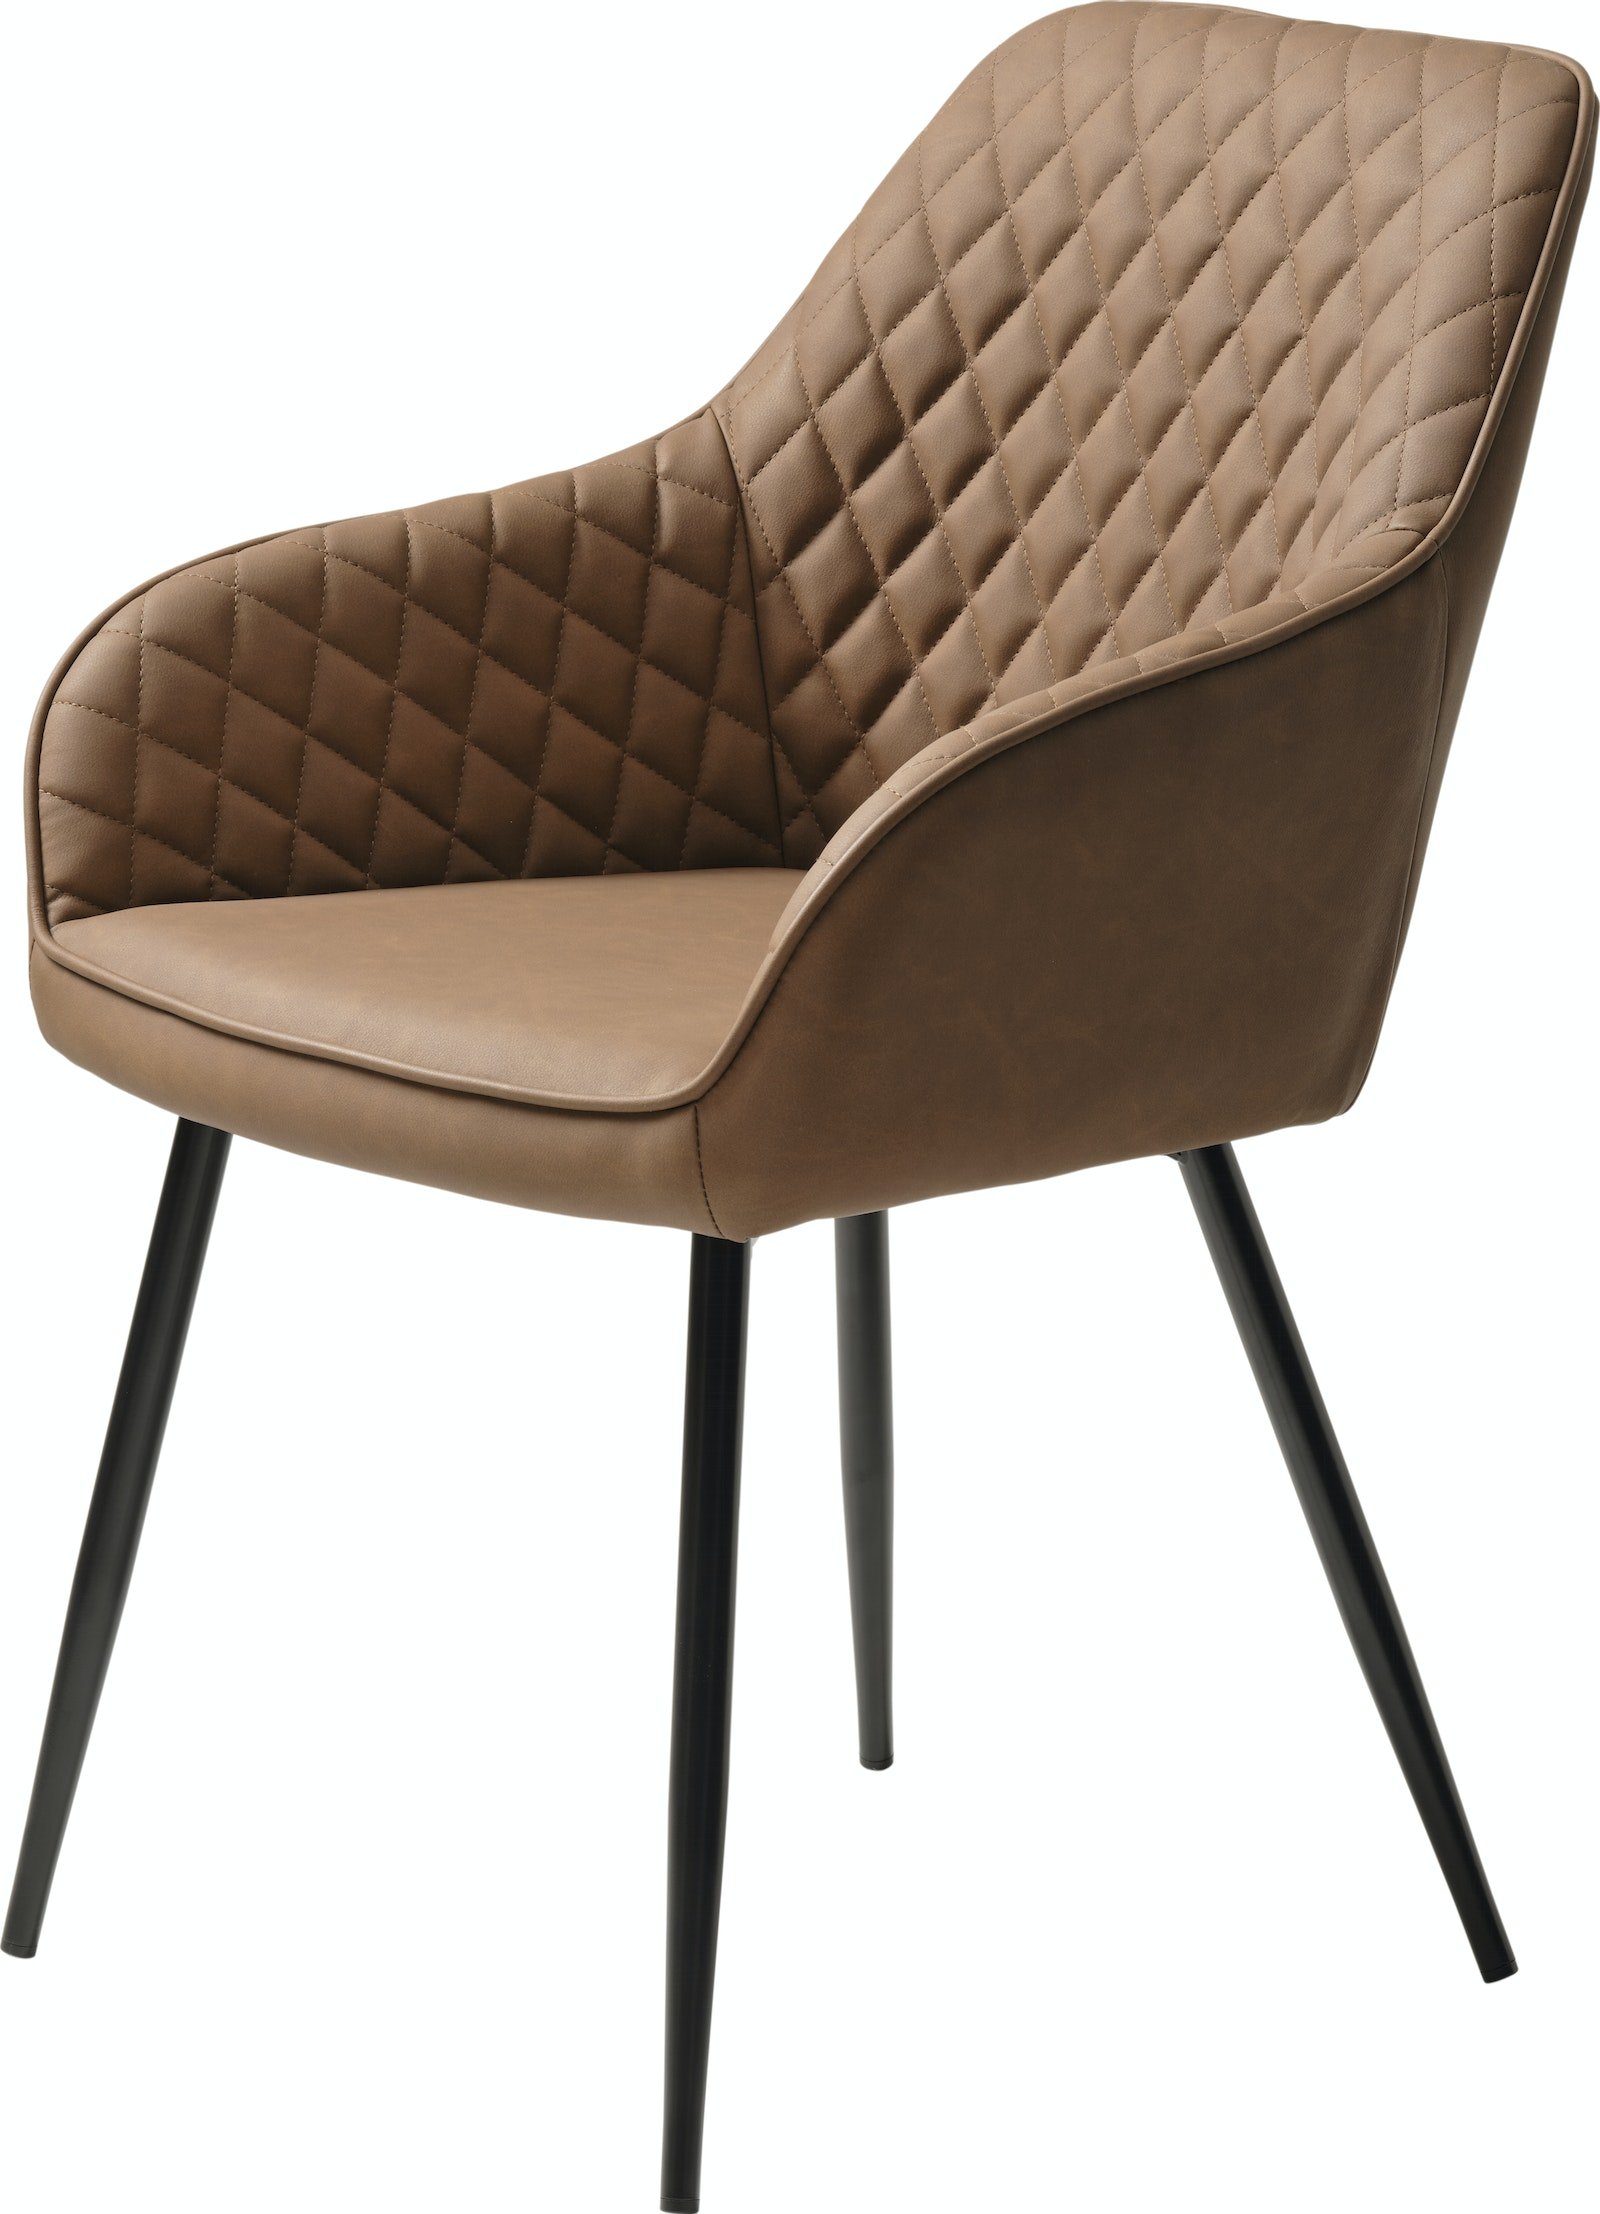 Milton, Spisebordsstol med armlæn, Brun, PU læder by Unique Furniture (H: 84 cm. x B: 58 cm. x D: 59 cm., Lys brun)